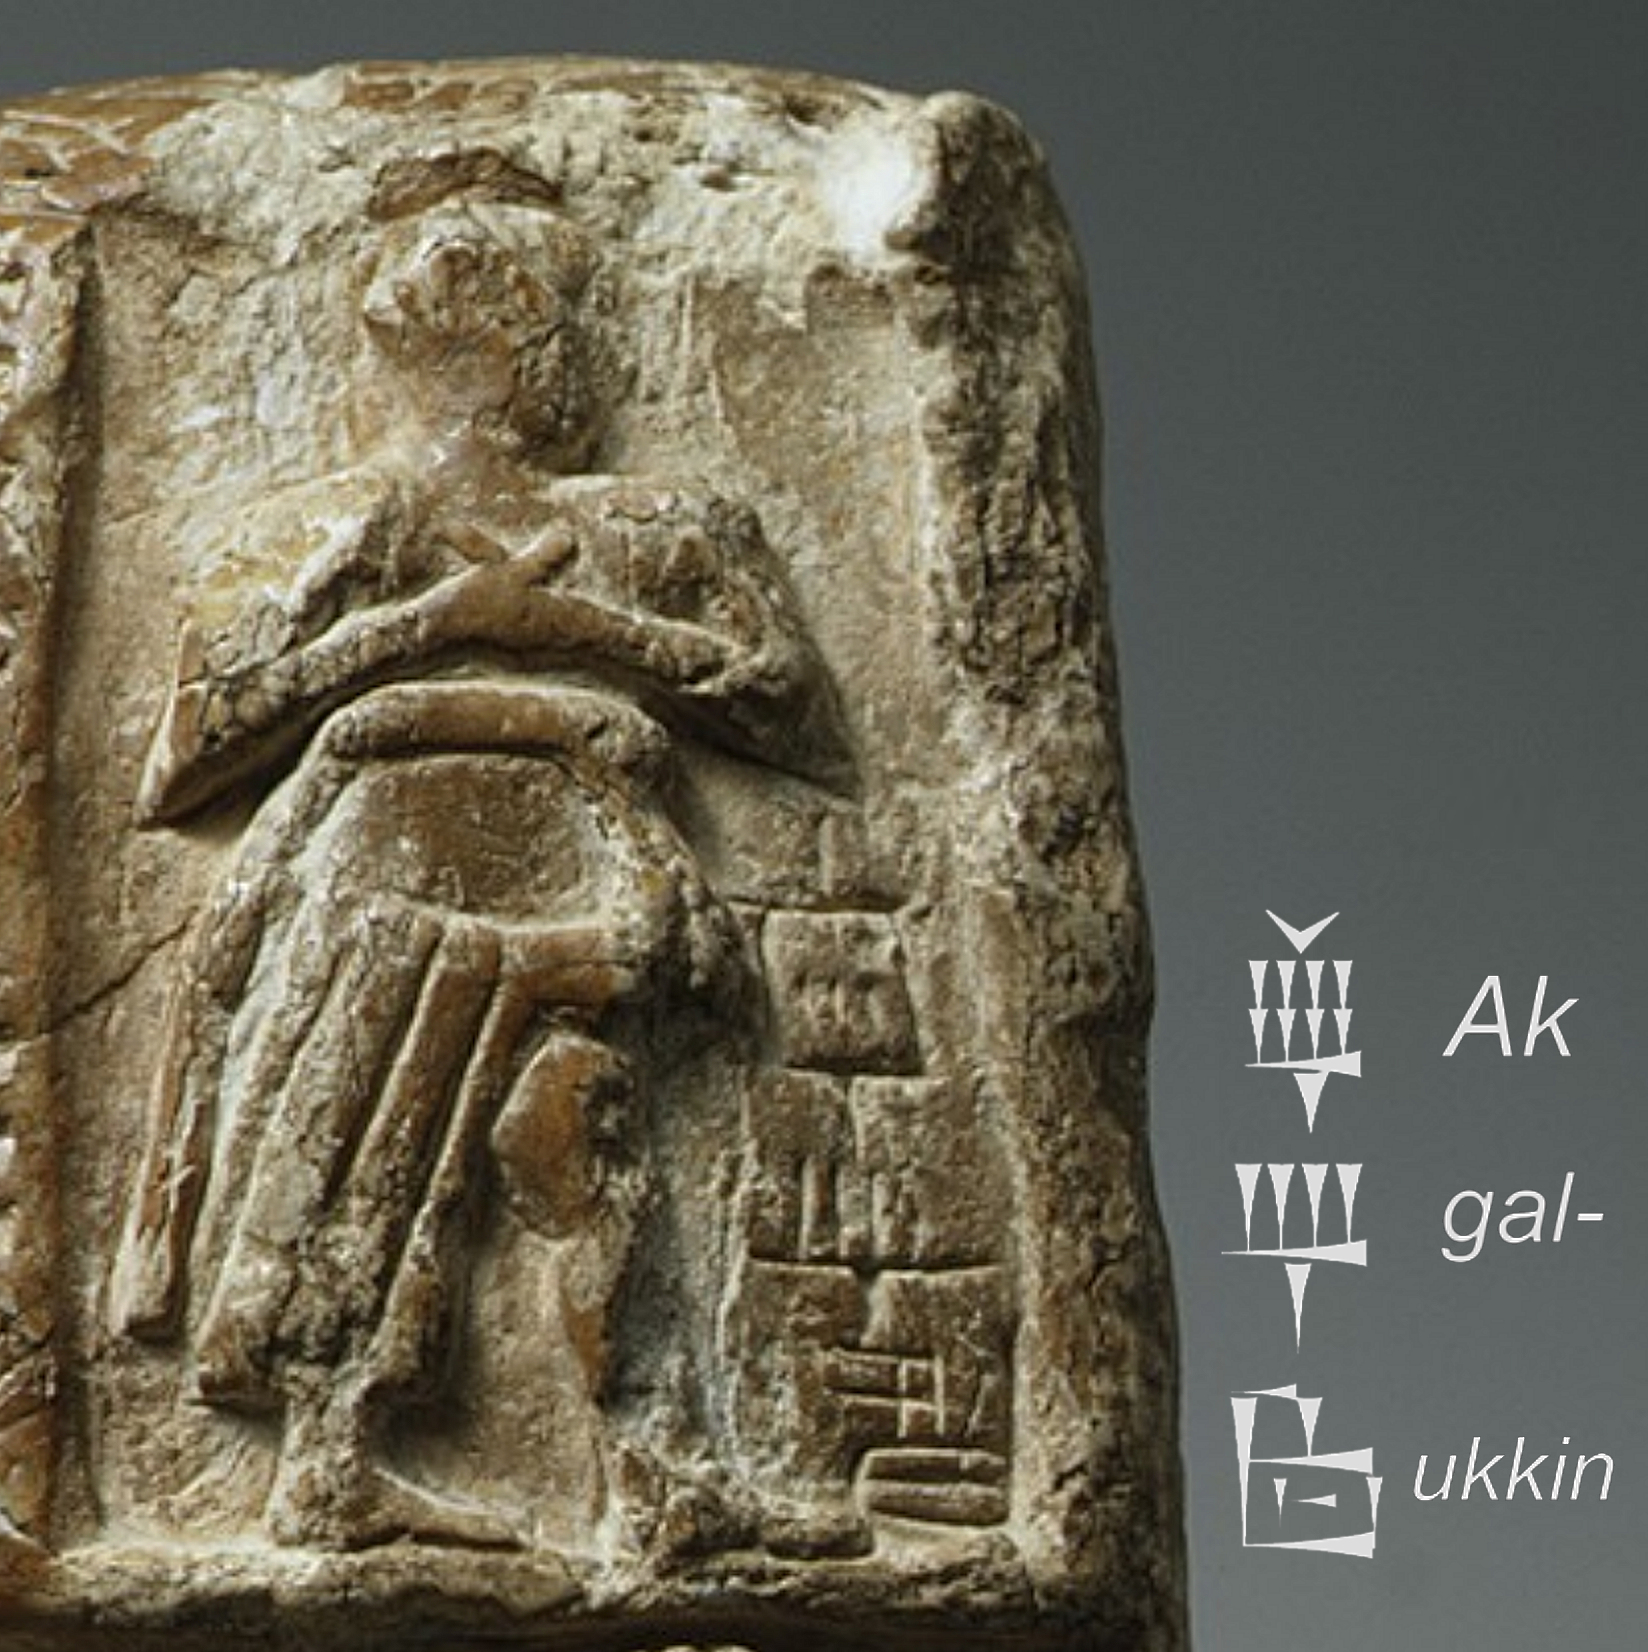 Sumerian King List - Wikipedia